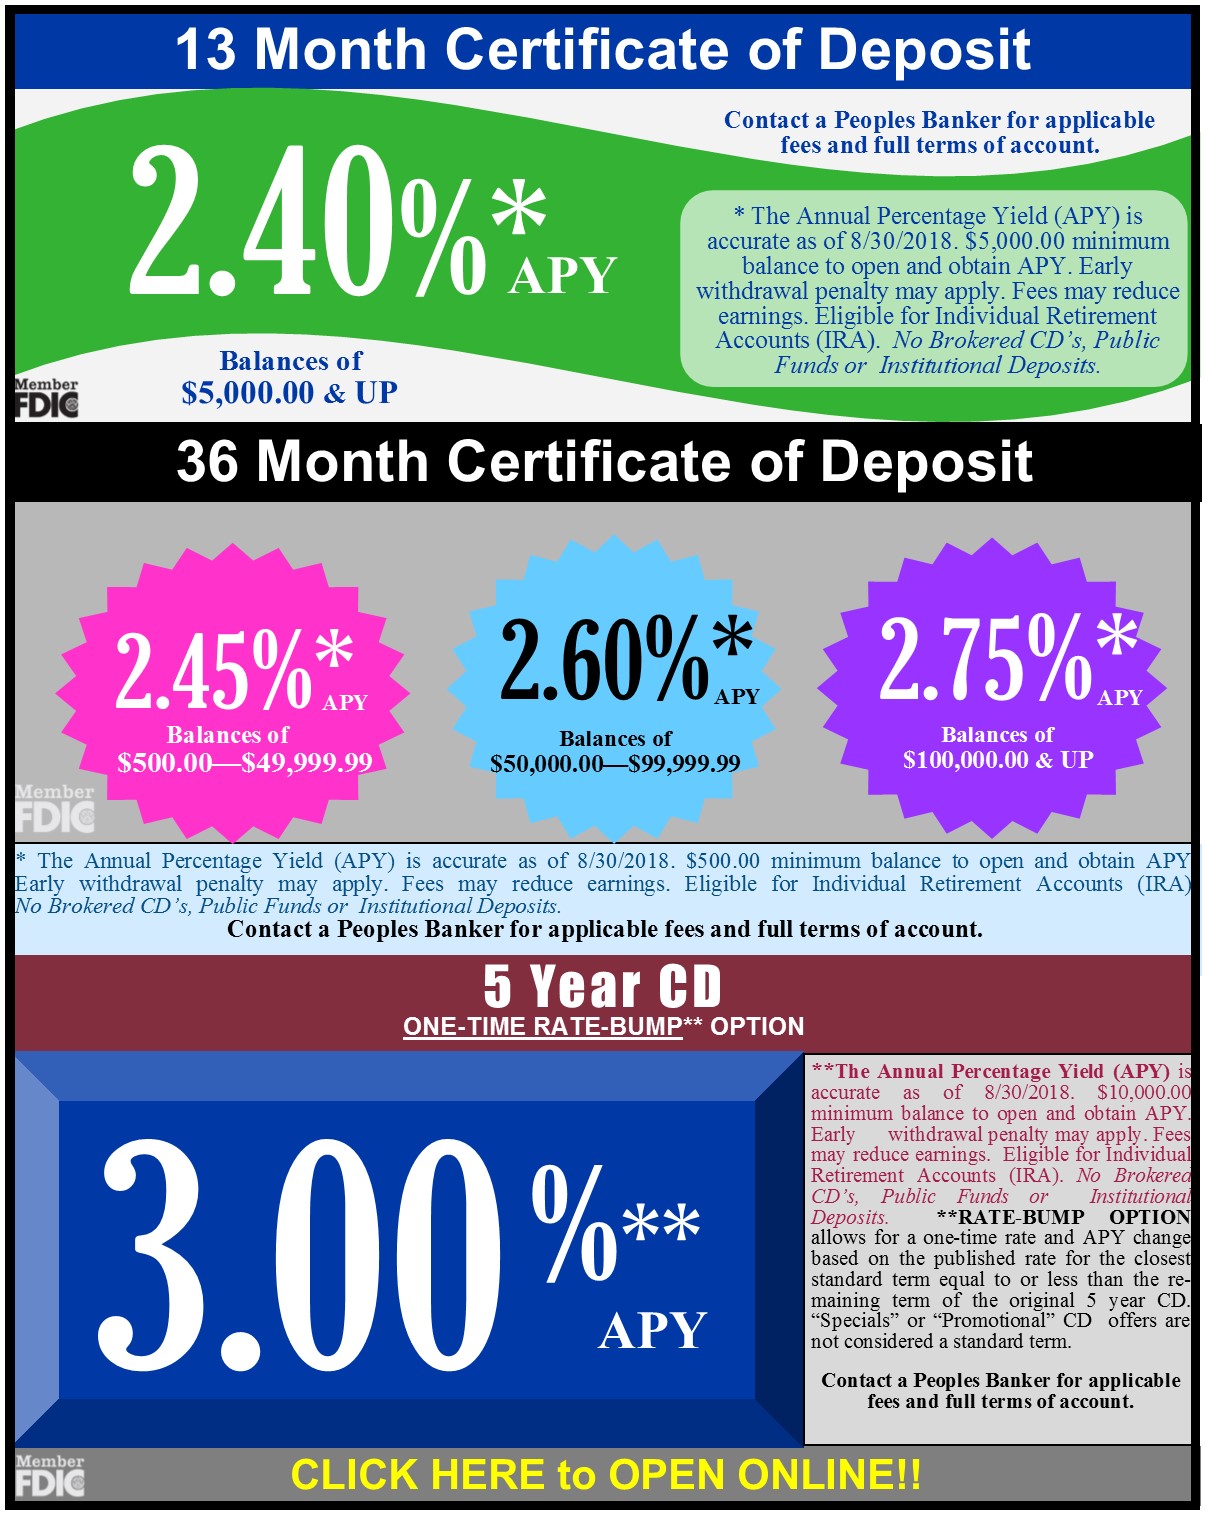 CDs (Certificates of Deposit), IRAs Peoples Bank